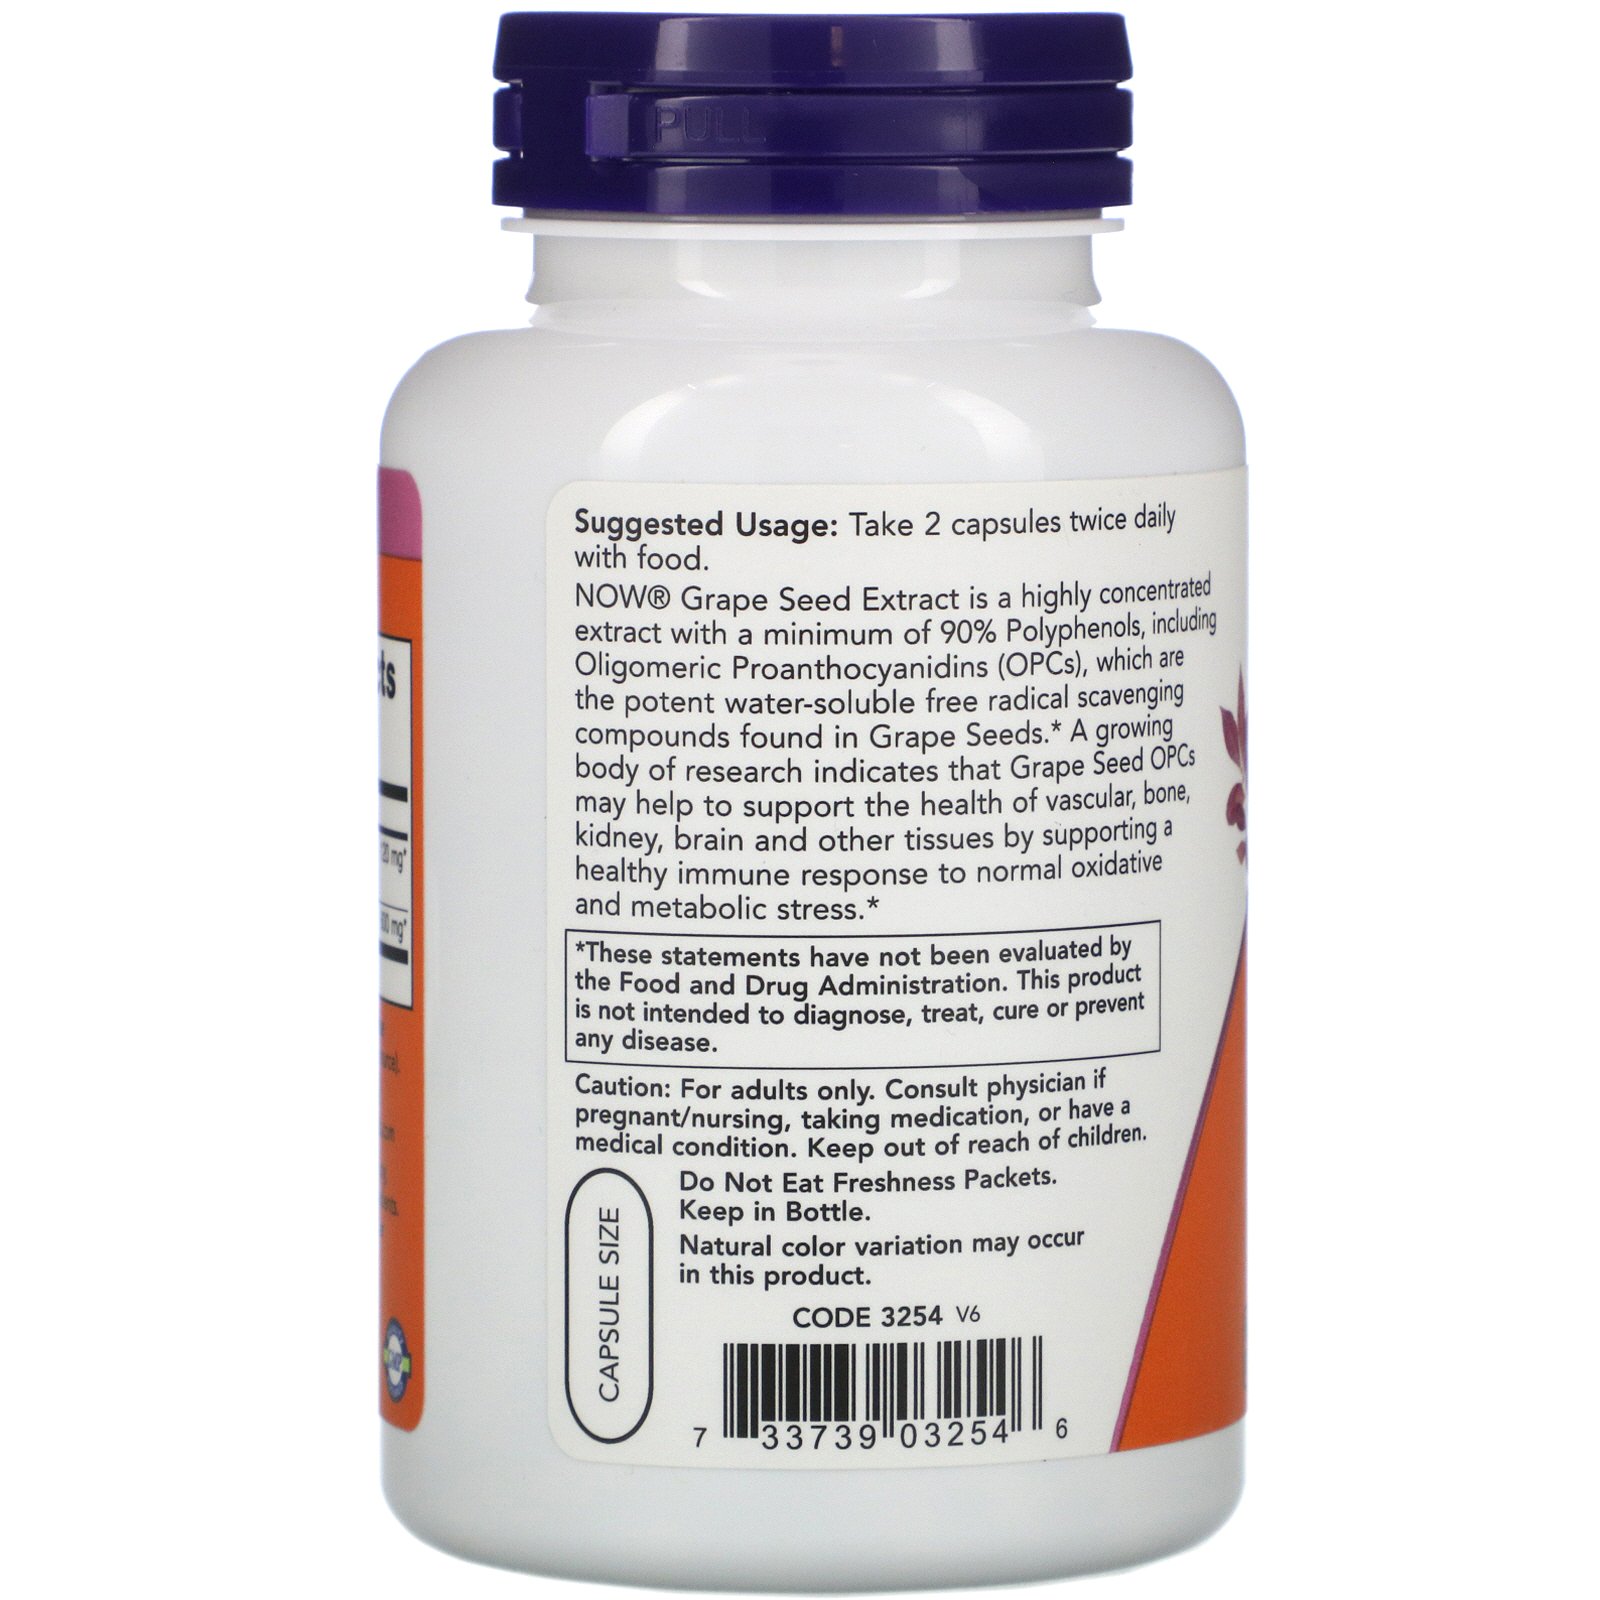 Grape Seed, Экстракт Виноградных Косточек 60 мг - 90 капсул